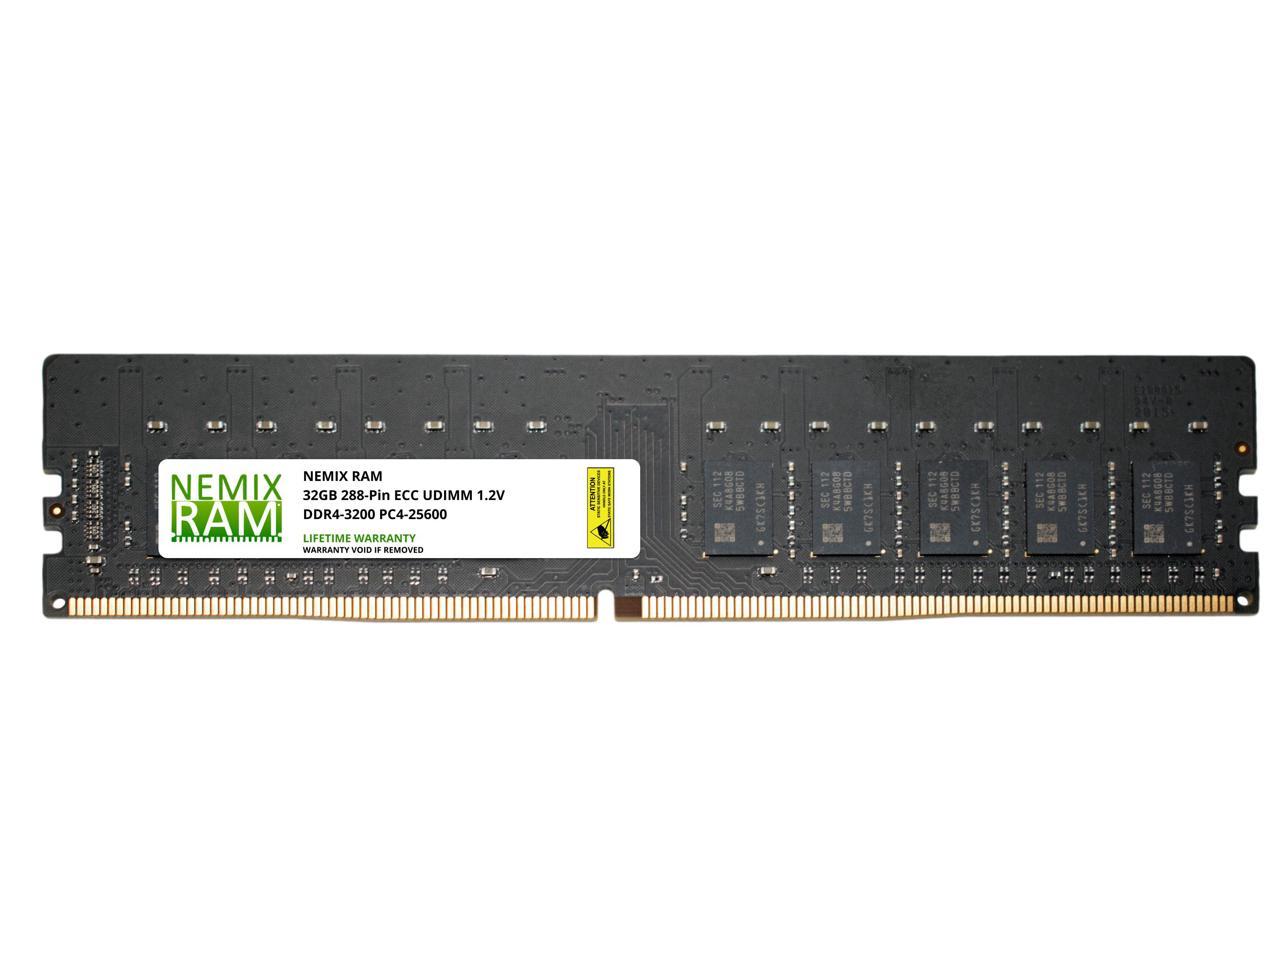 NEMIX RAM 32GB DDR4-3200 PC4-25600 2Rx8 ECC Unbuffered Memory